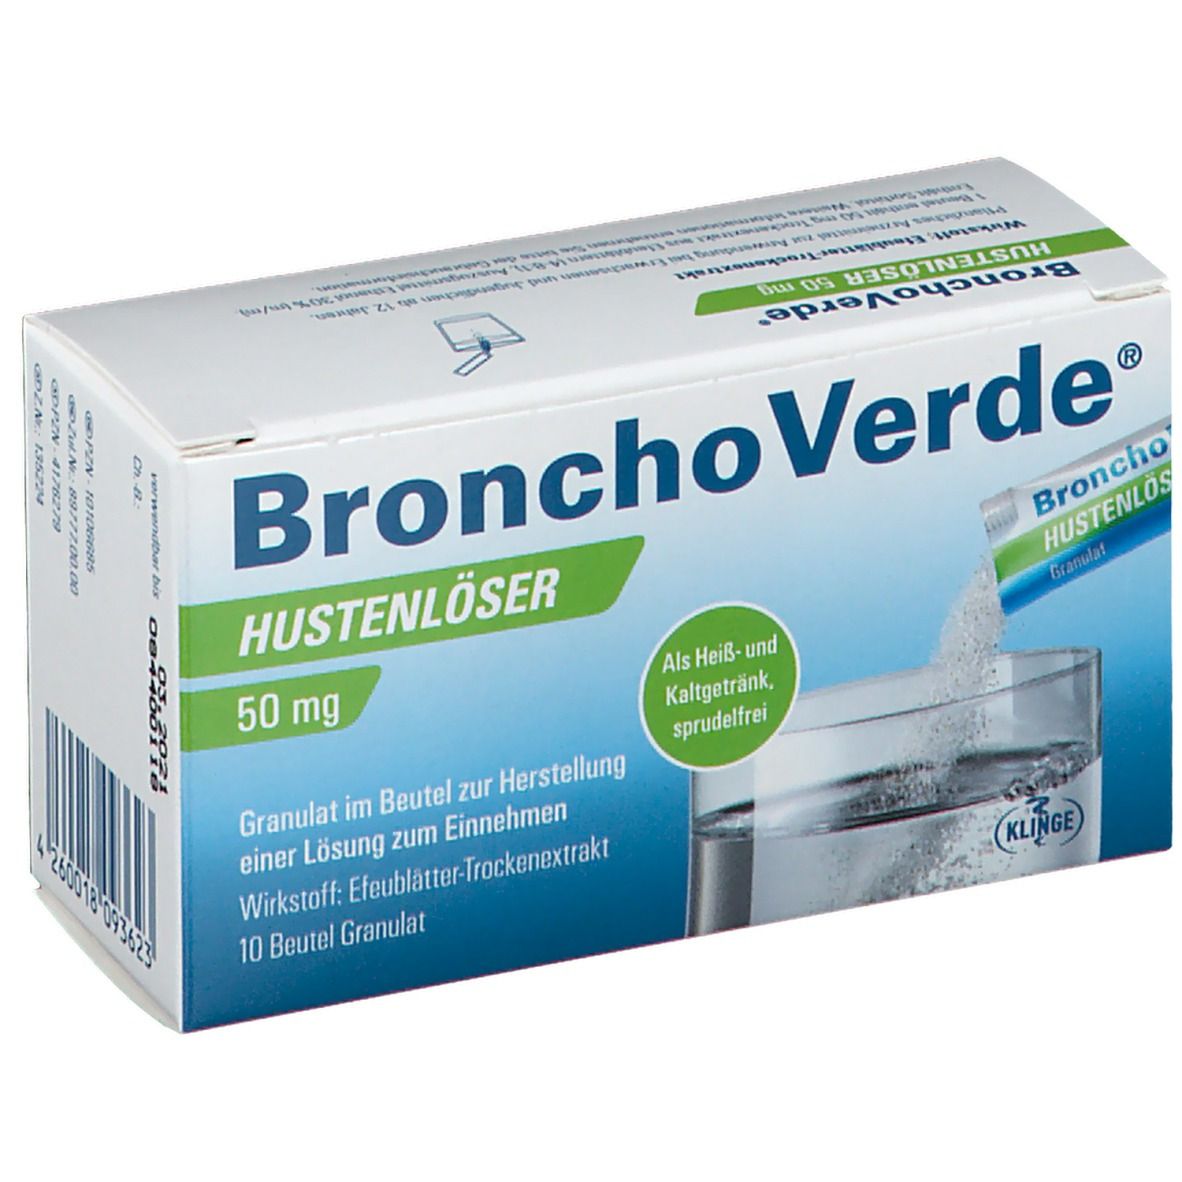 BronchoVerde® Hustenlöser 50mg